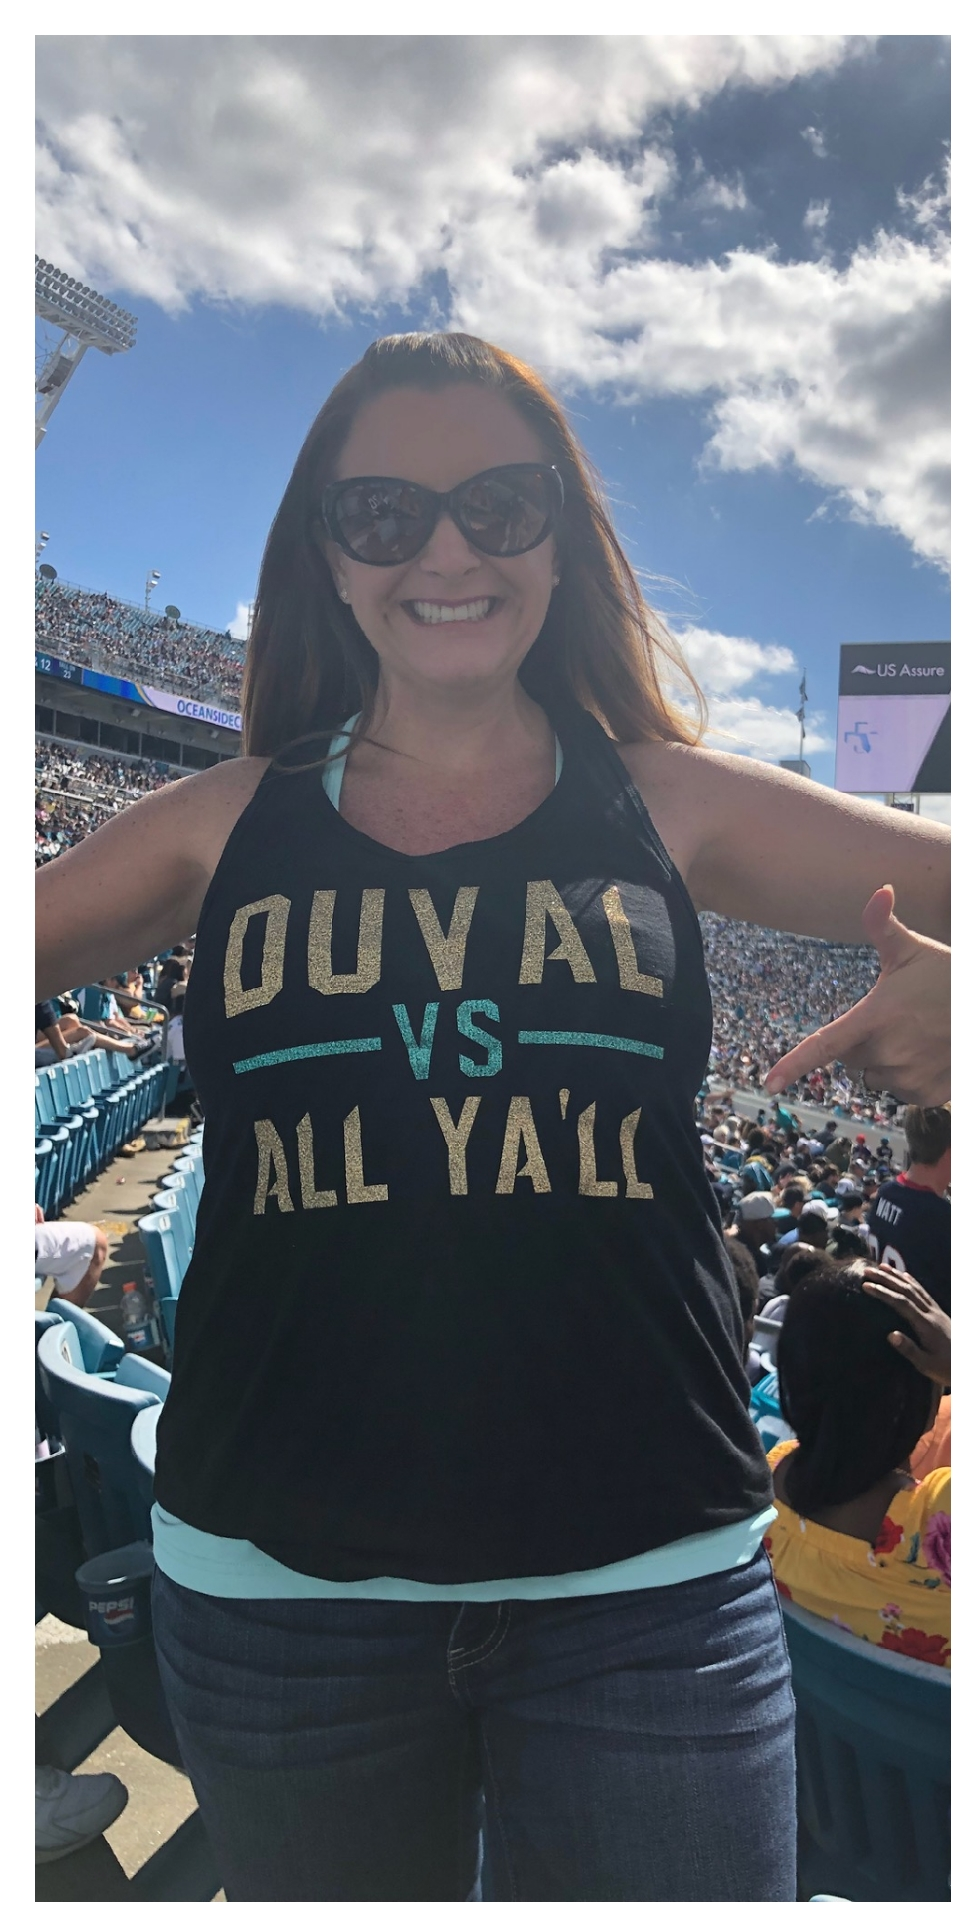 Black Duval vs All Ya’ll Shirt